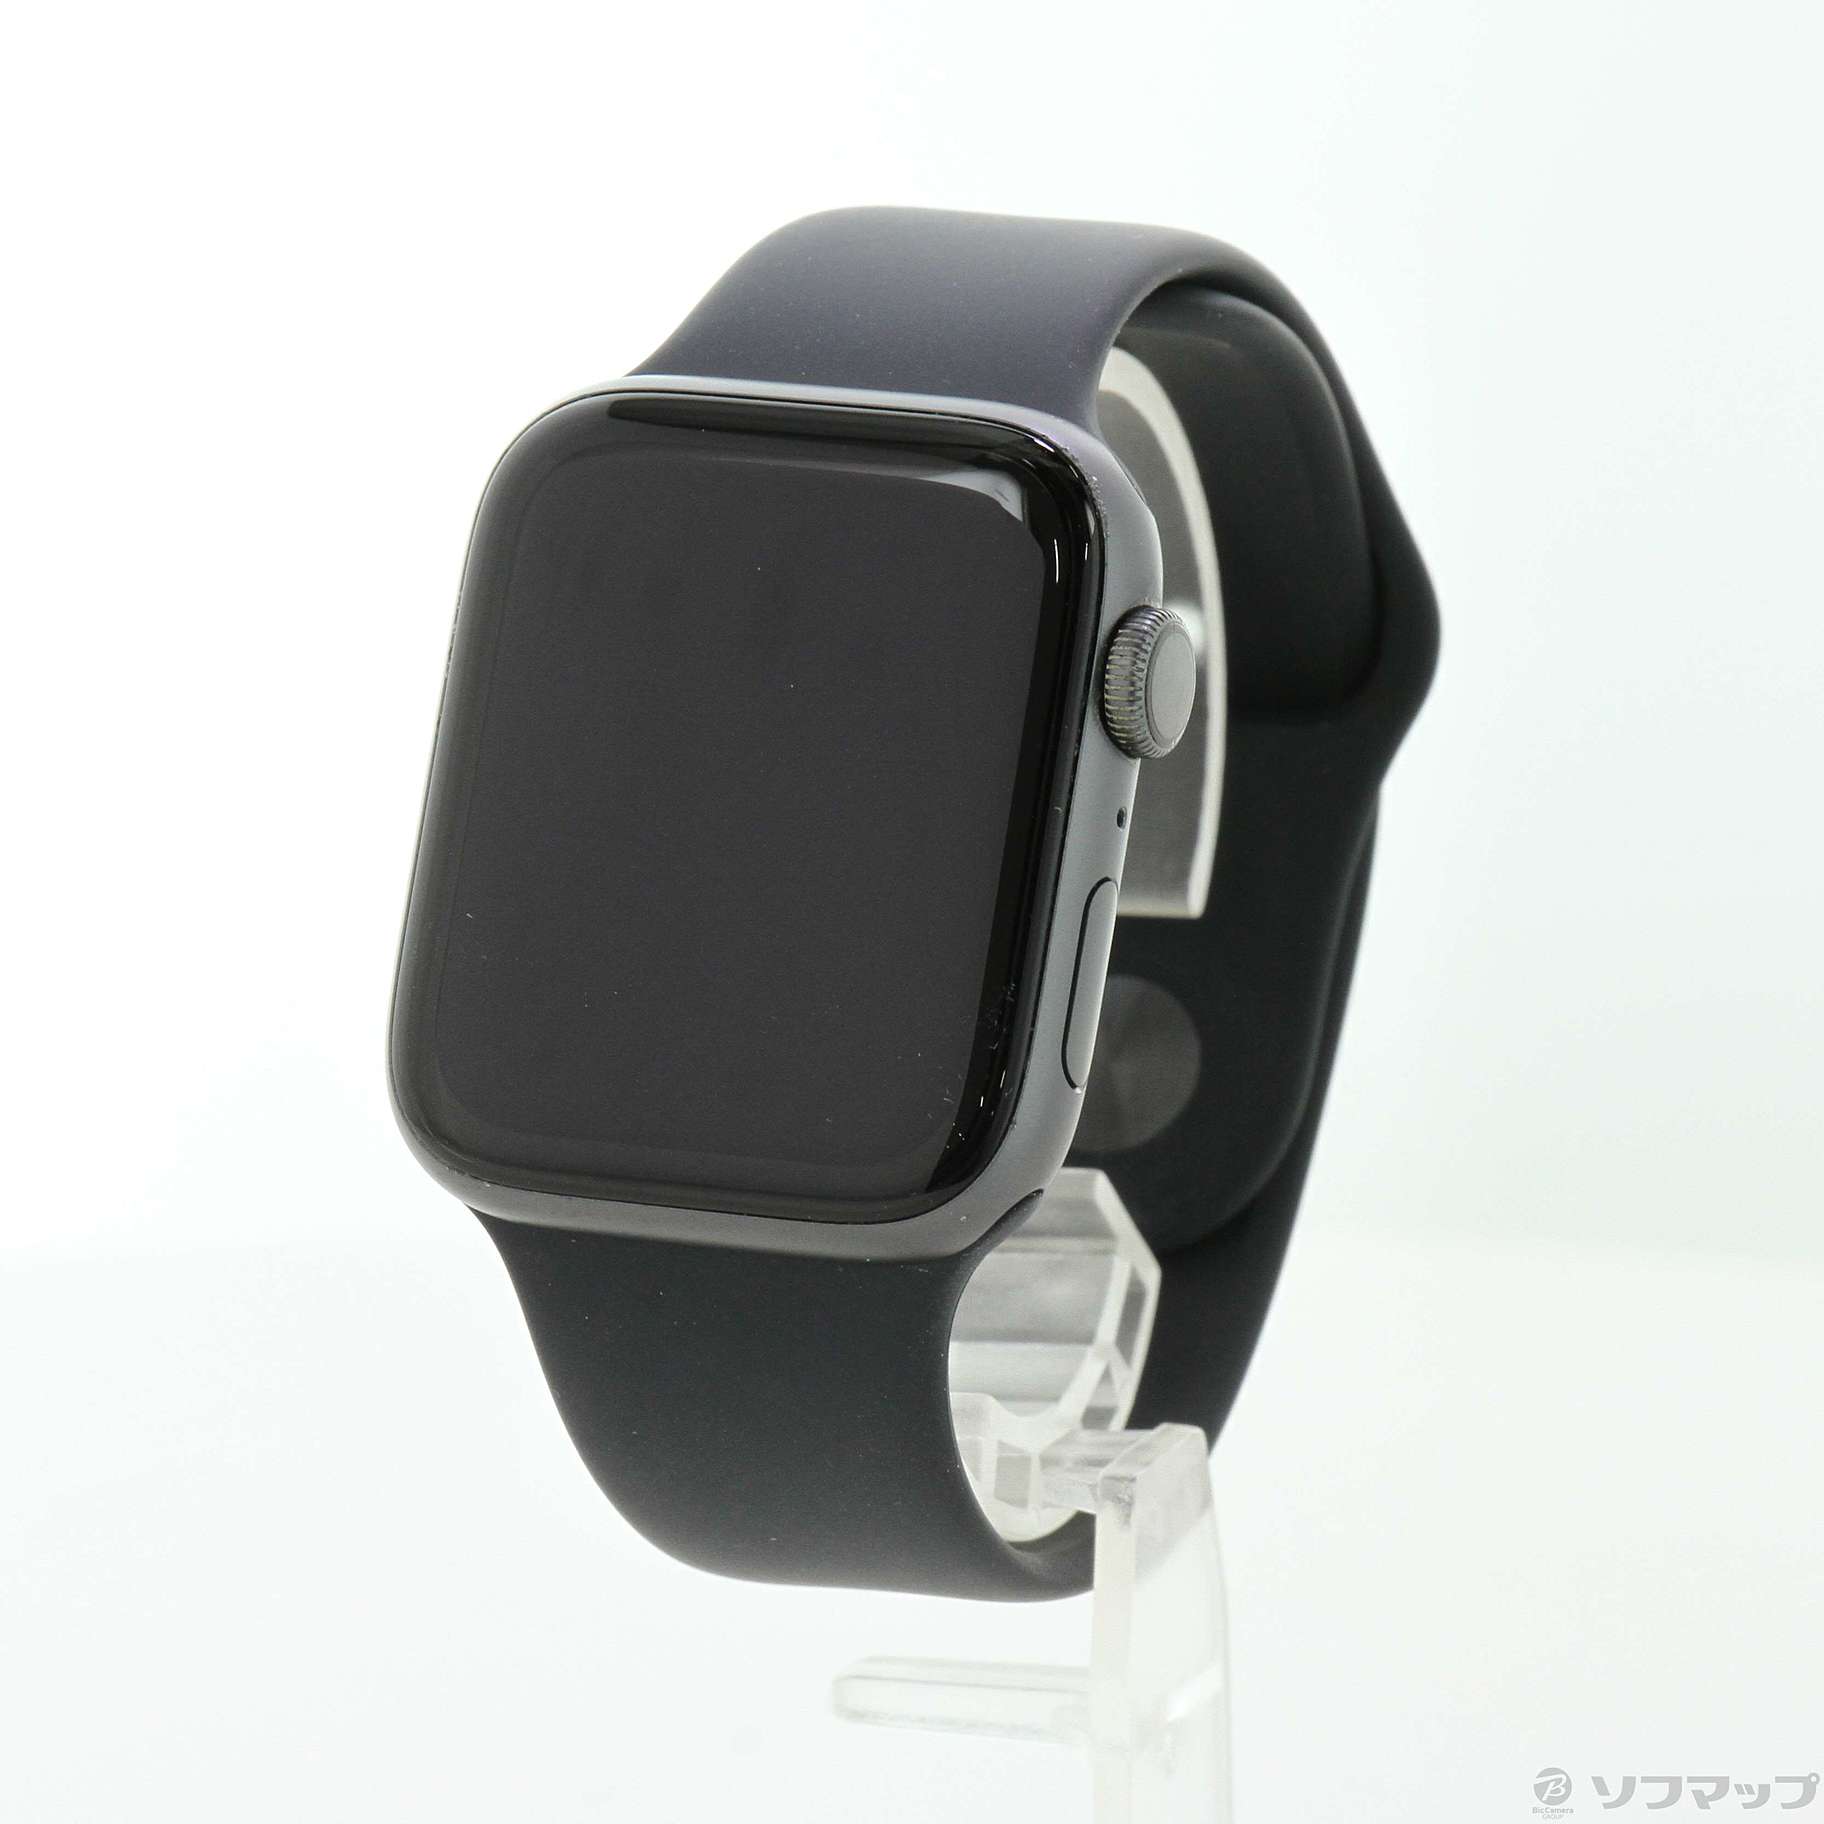 Apple品名Apple Watch Series 4 - 44mm Space Gray